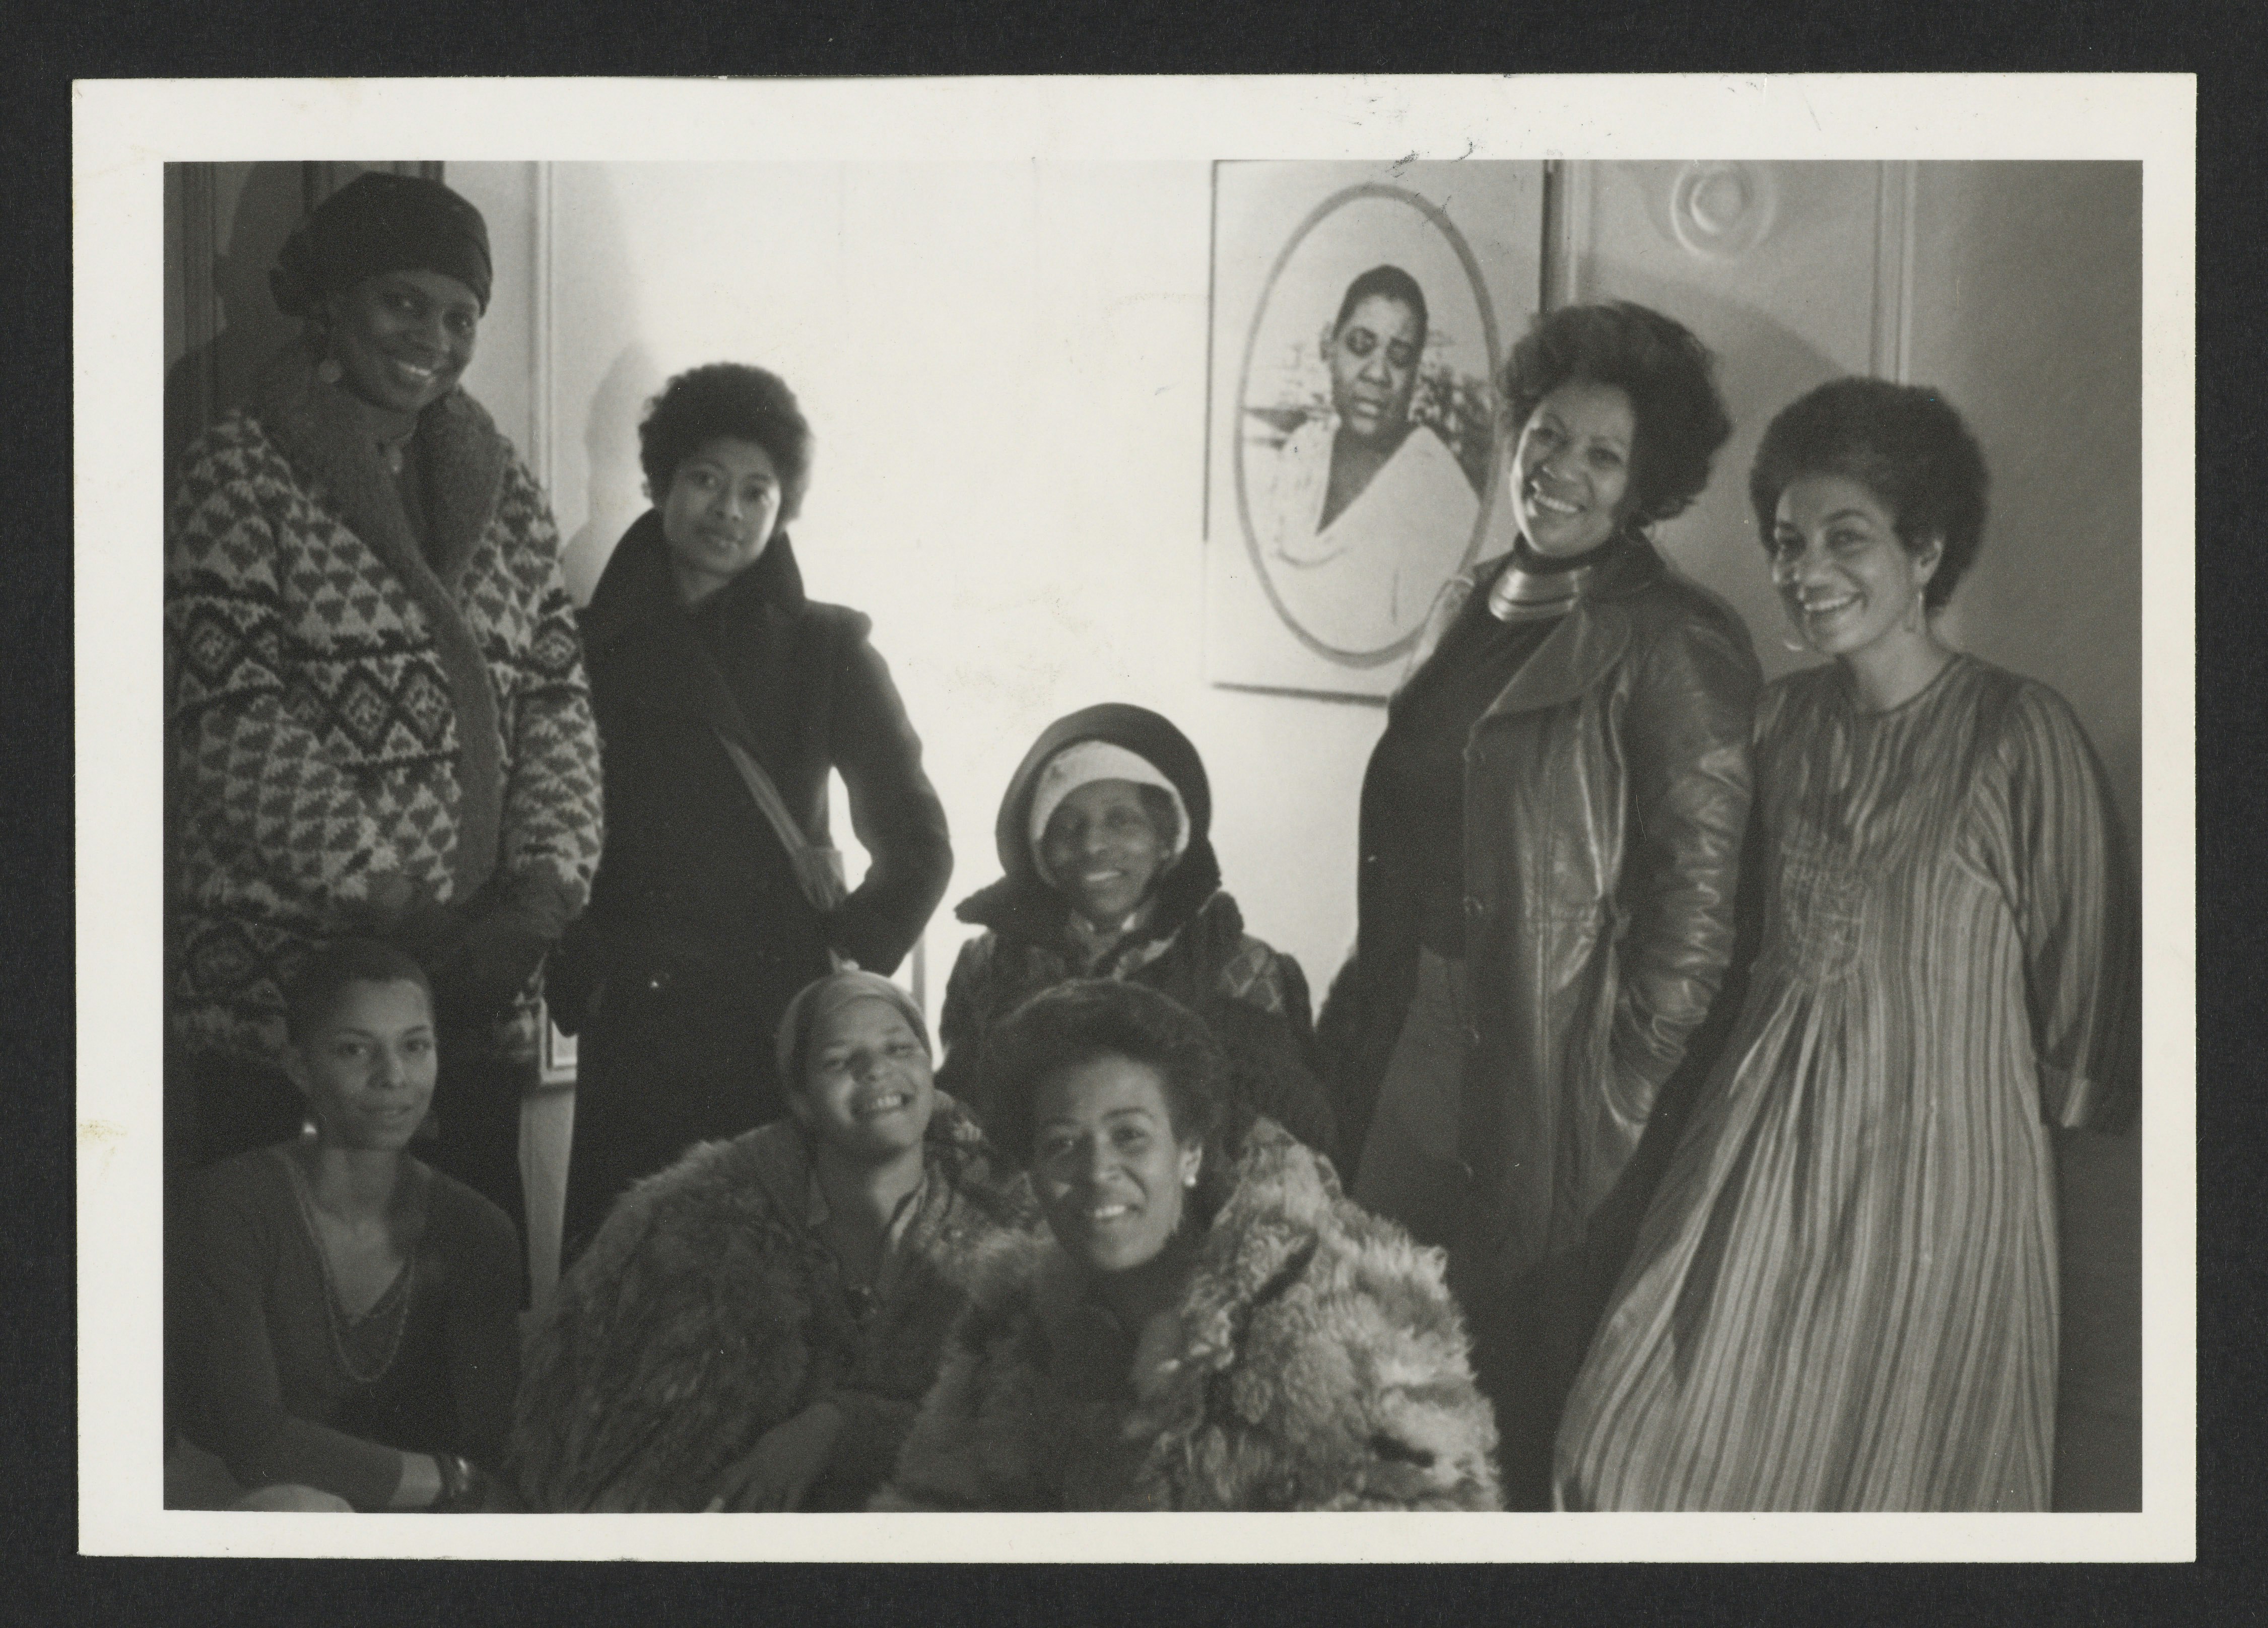 June Jordan, on far right, with Toni Morrison, Alice Walker, Nana Maynard, Ntzoke Shange, Vertamae Grosvenor and others